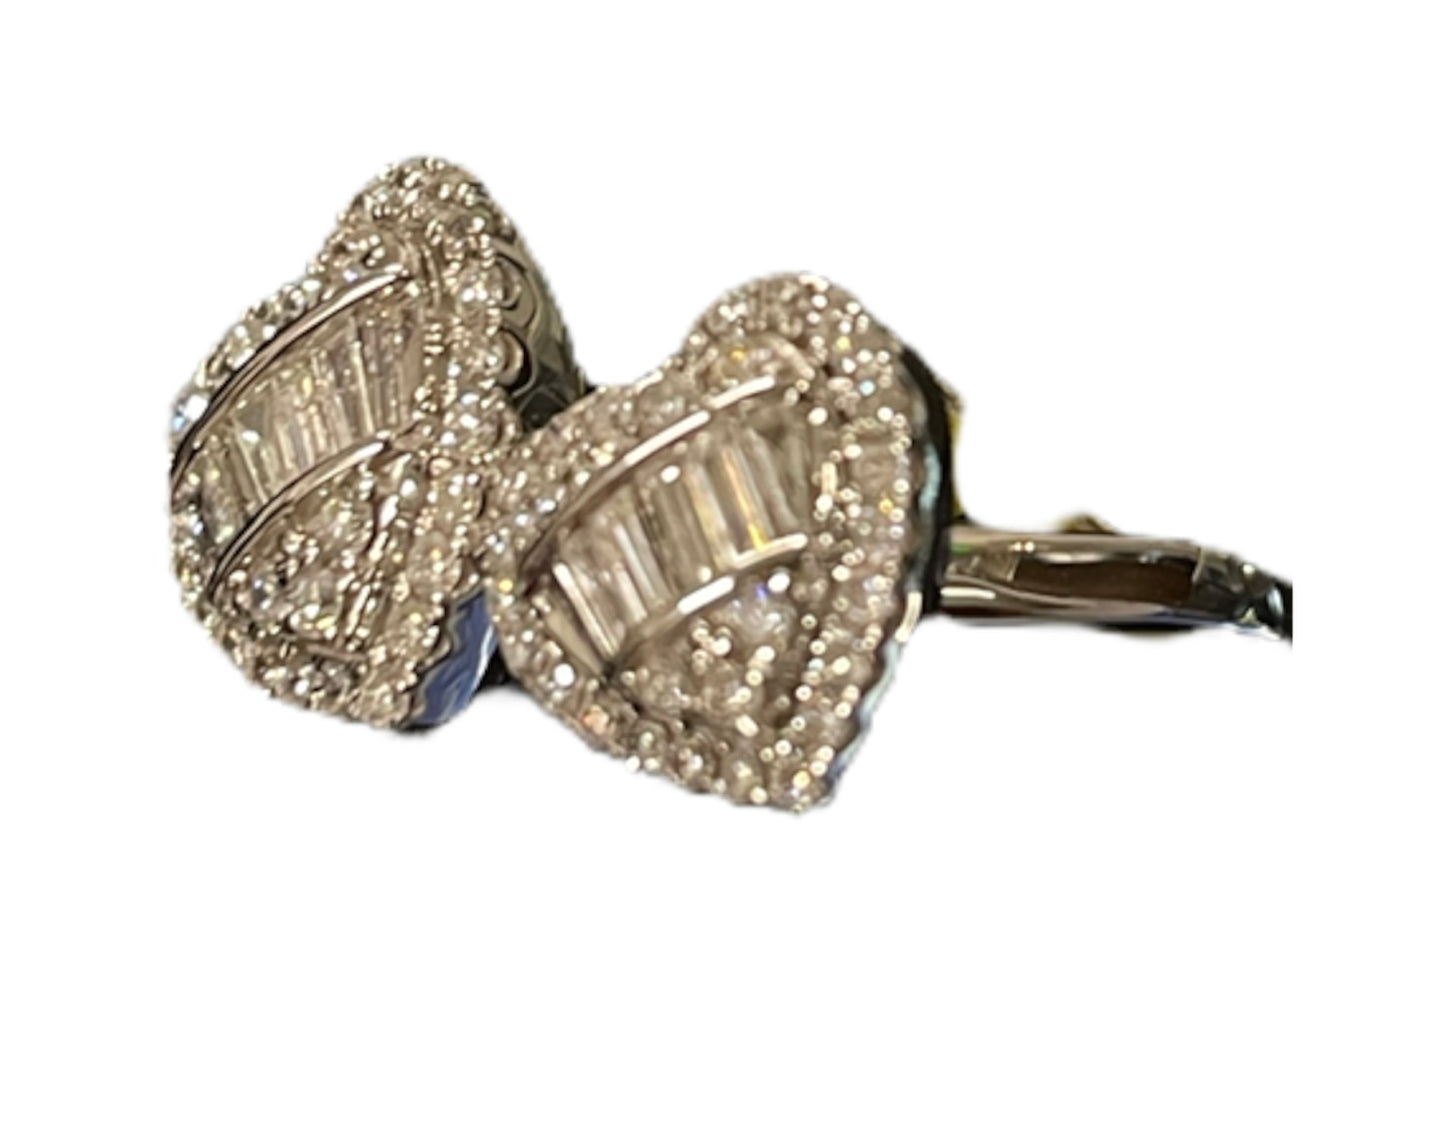 Diamond Double Heart Ring - Baguette Cut 0.72 Carat in 14KT Gold